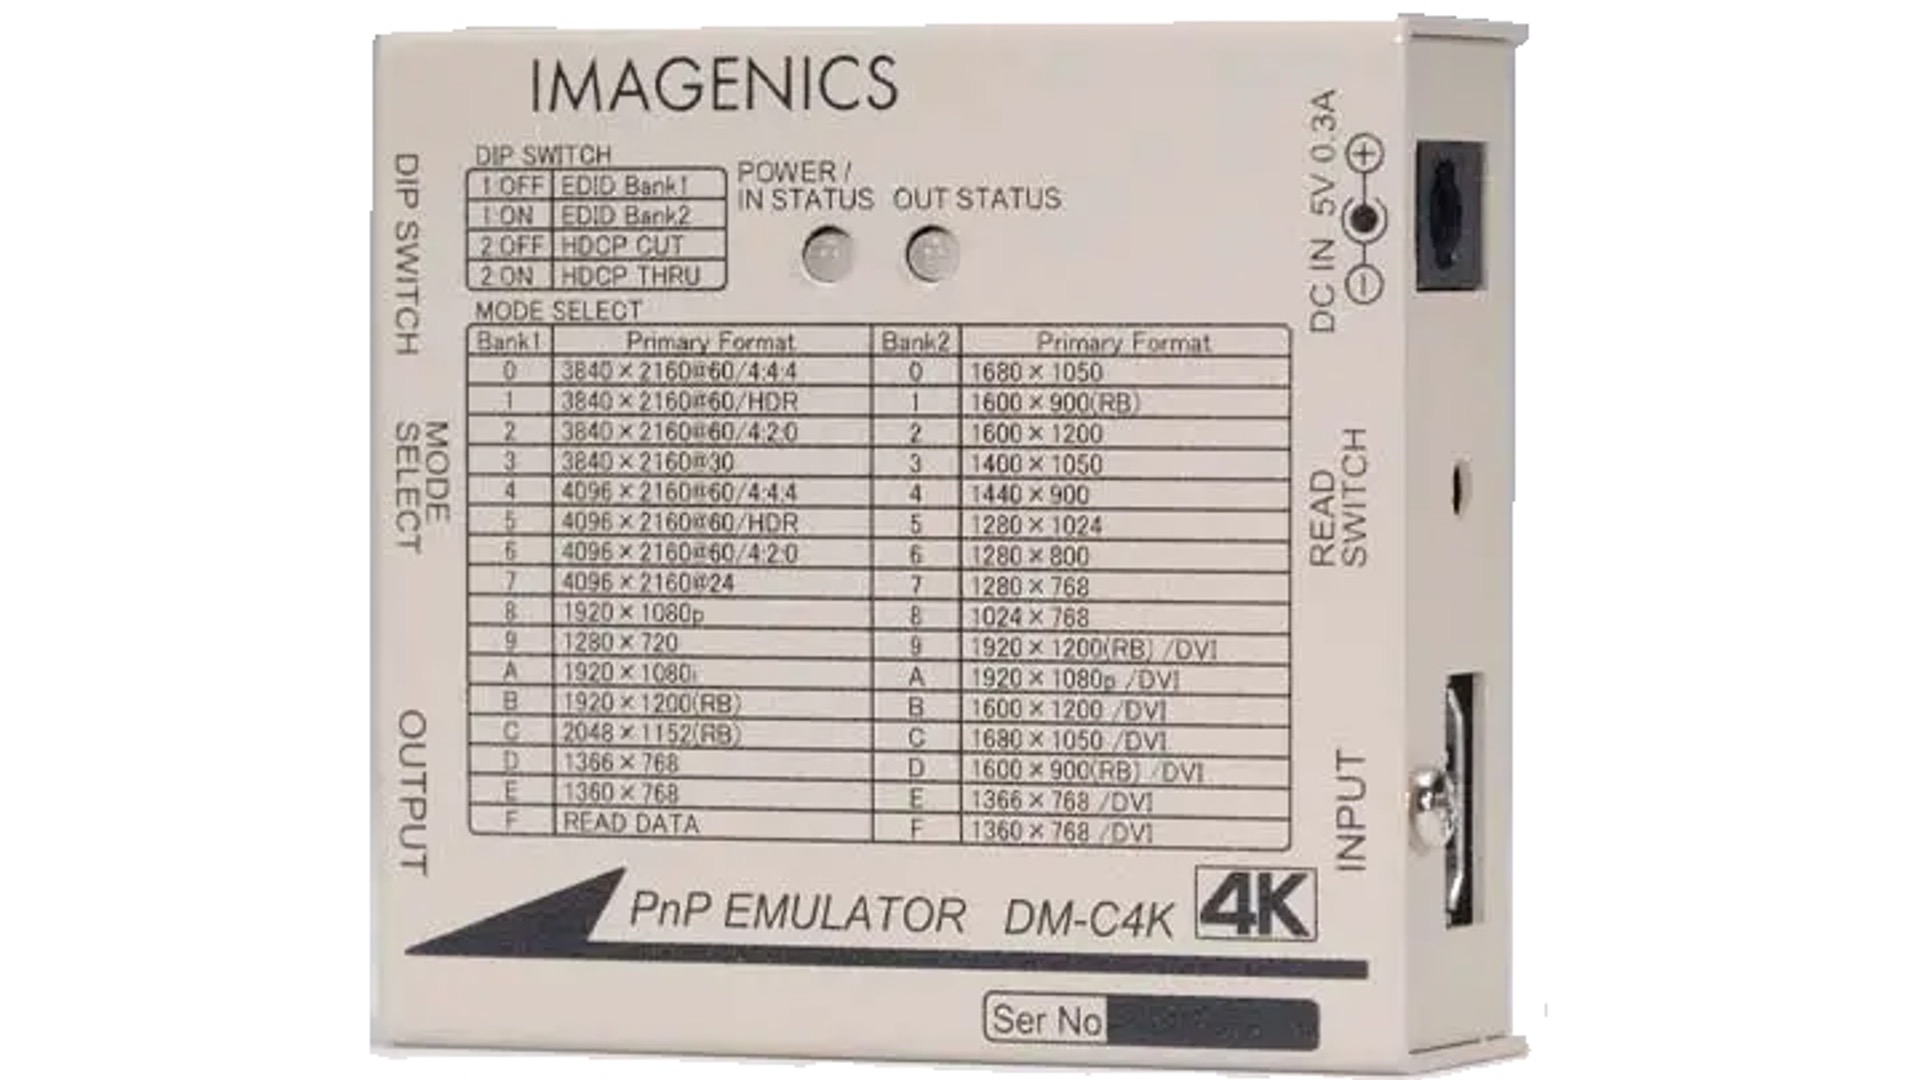 HDMIプラグアンドプレイエミュレーター IMAGENICS DM-C4K レンタル